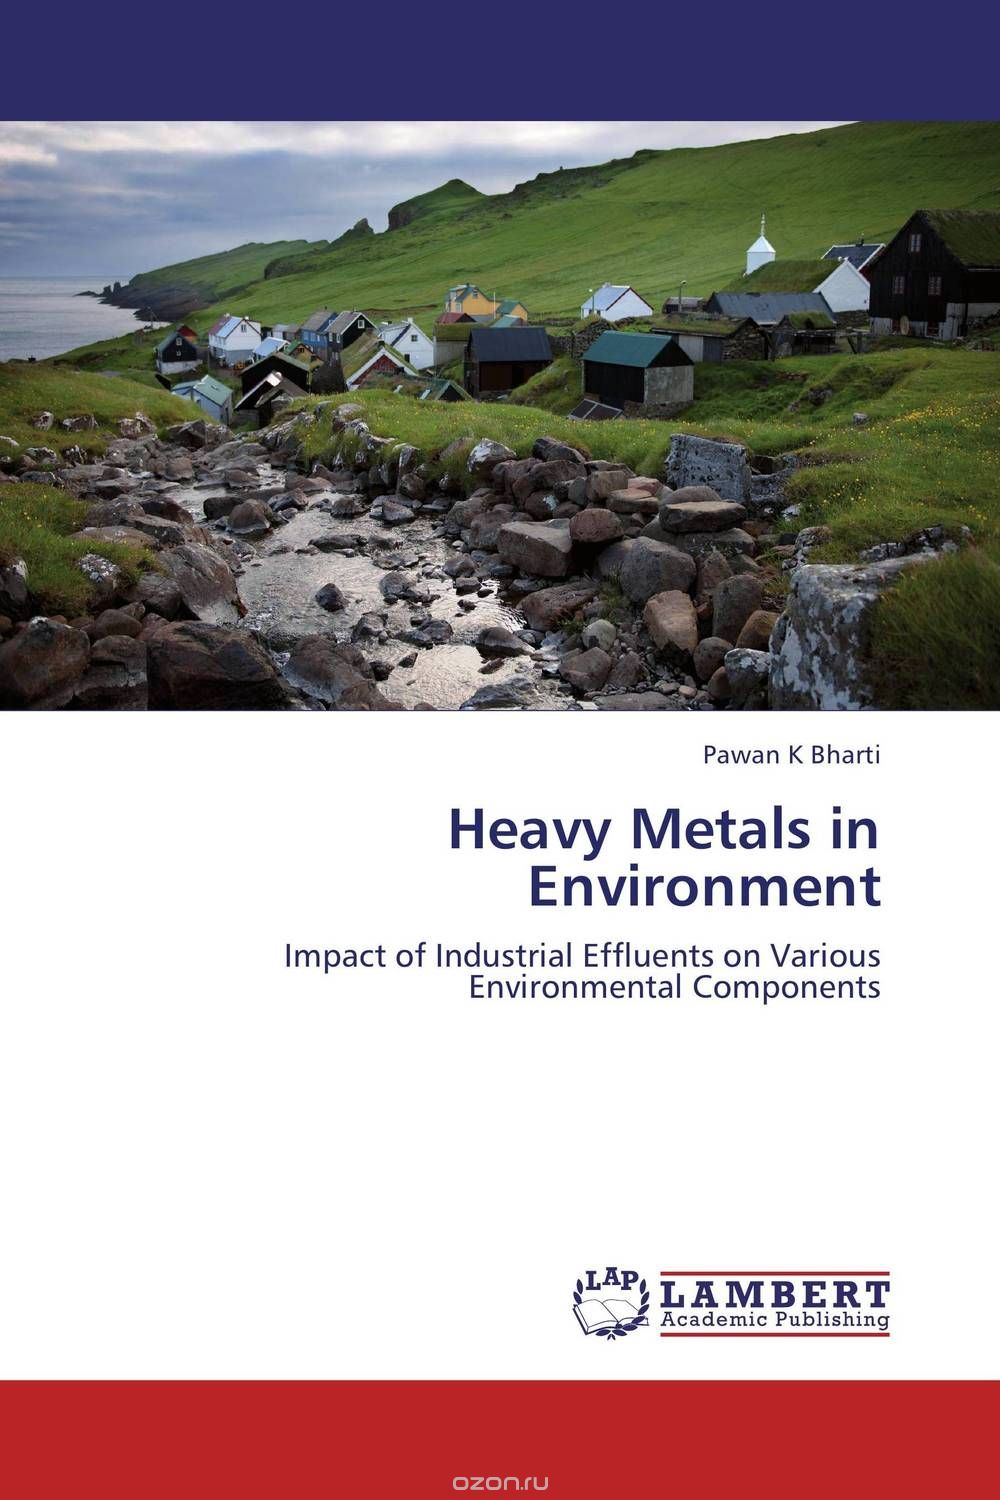 Скачать книгу "Heavy Metals in Environment"